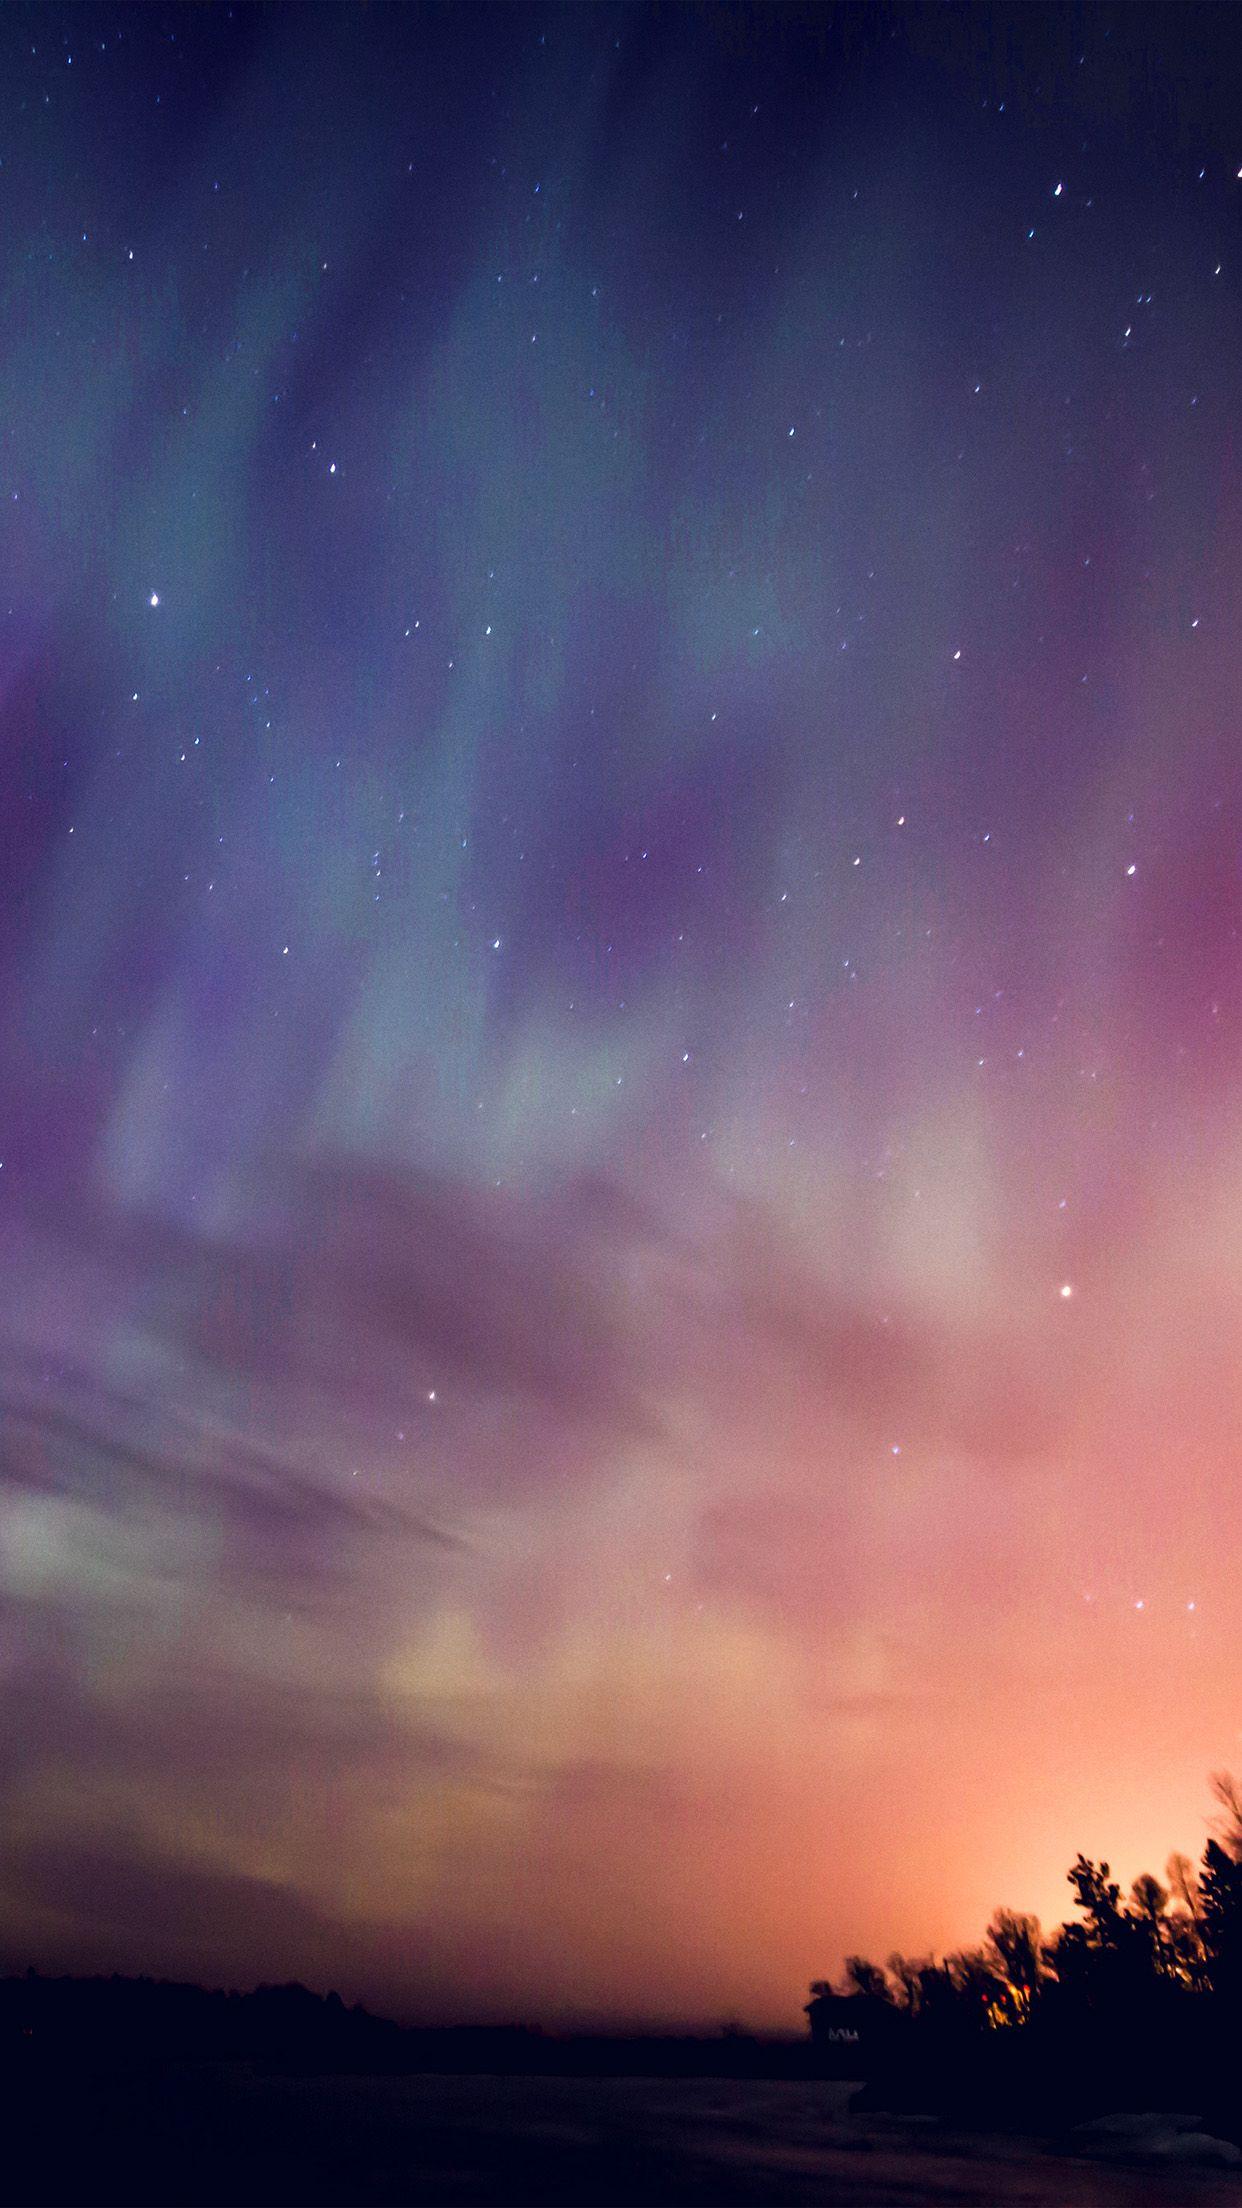 iPhone wallpaper. space aurora night sky